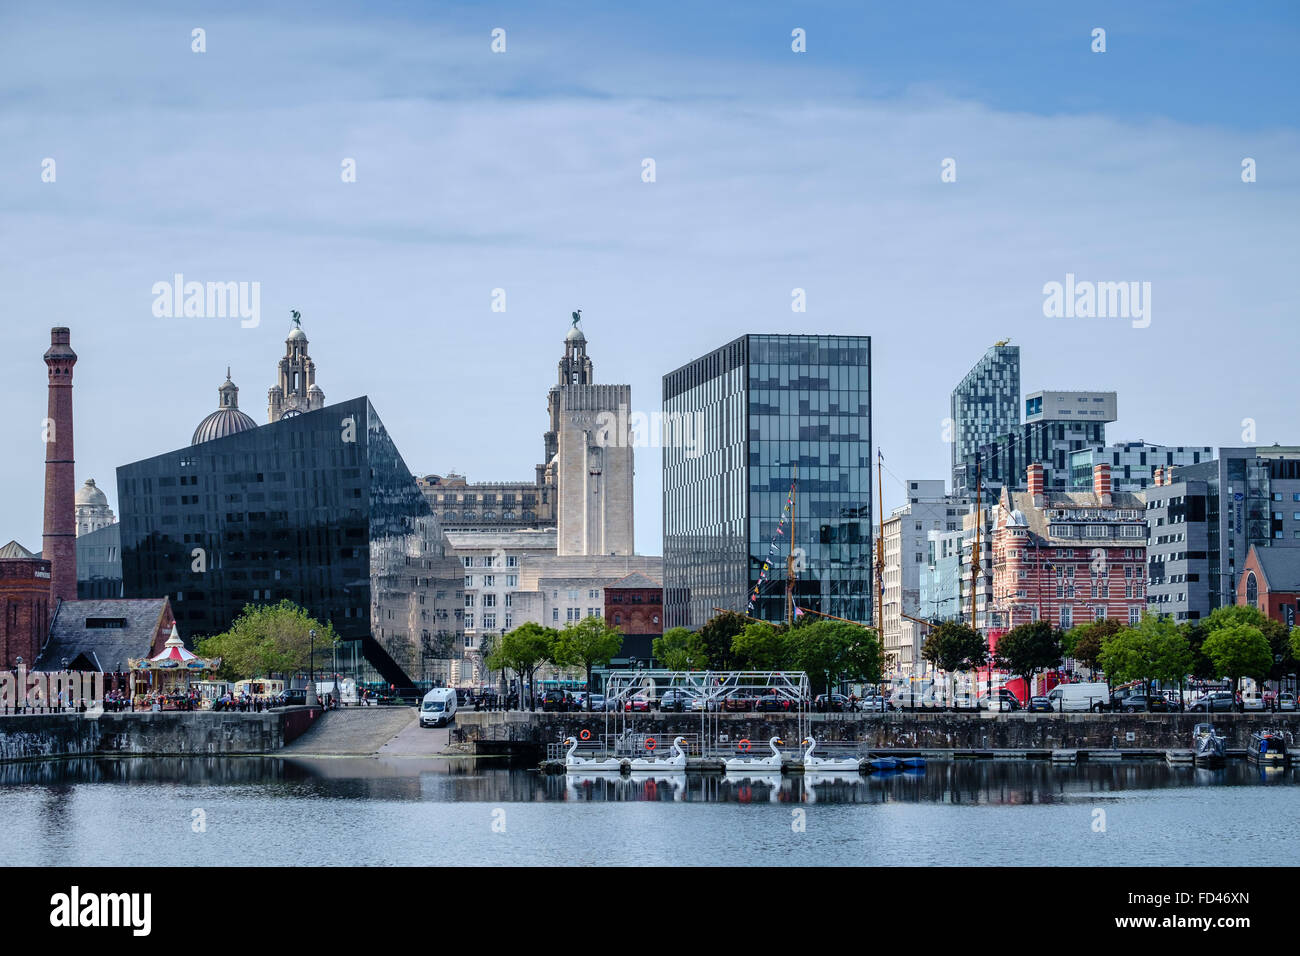 View of Liverpool's skyline across the docks. Stock Photo